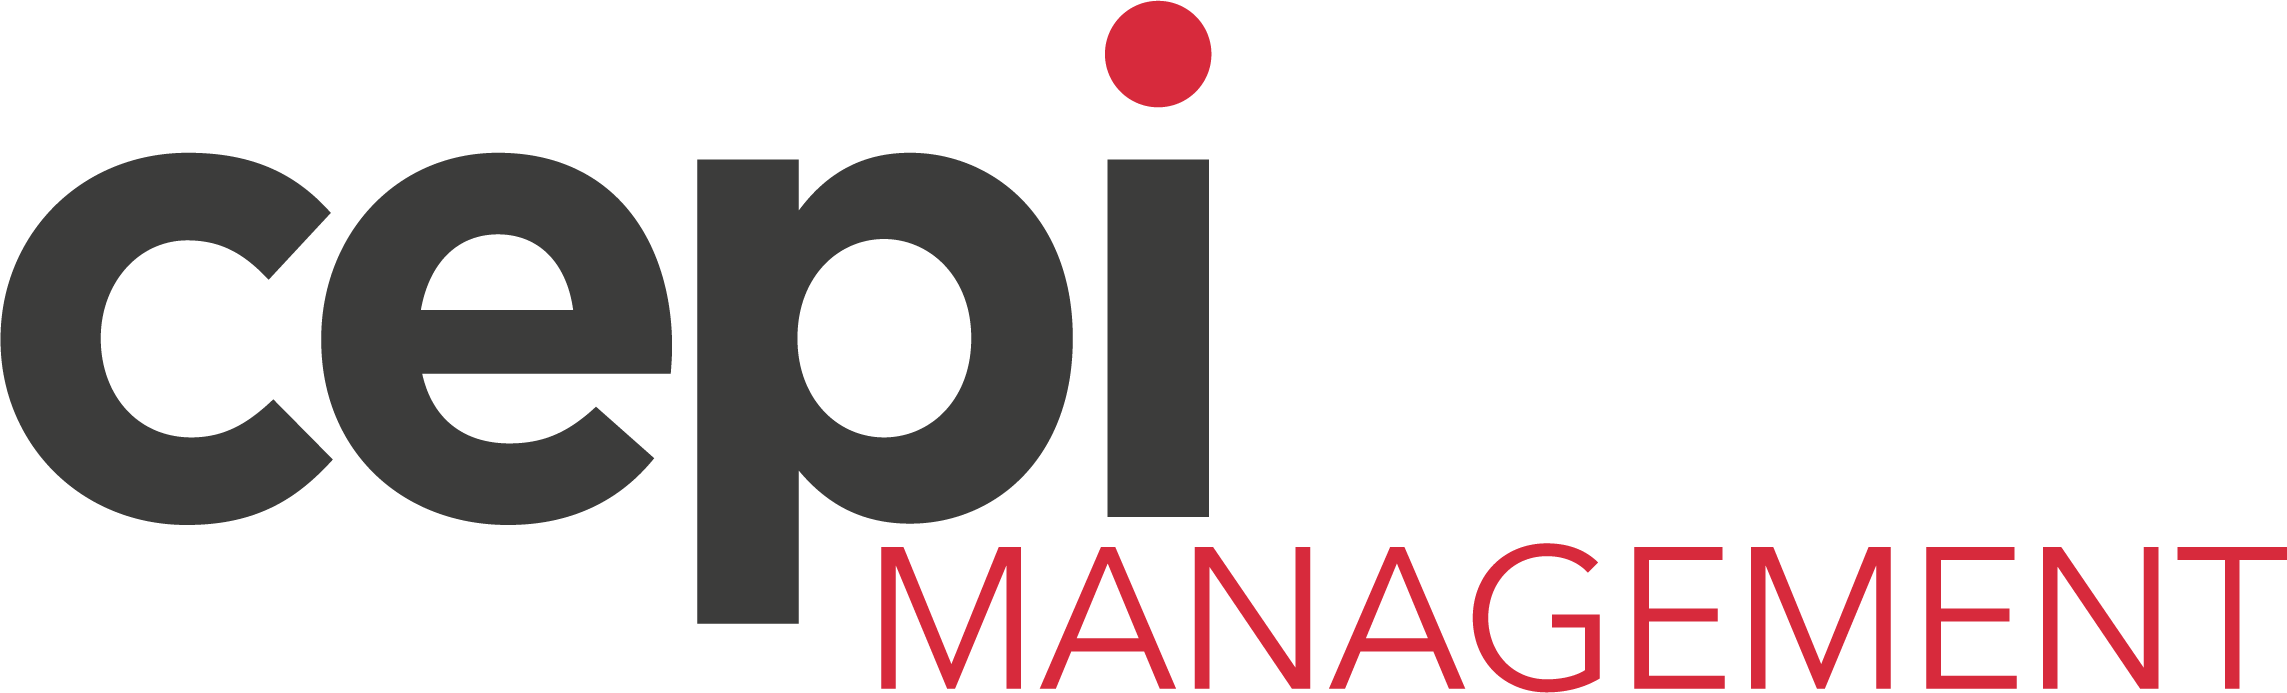 cepi-management-logo